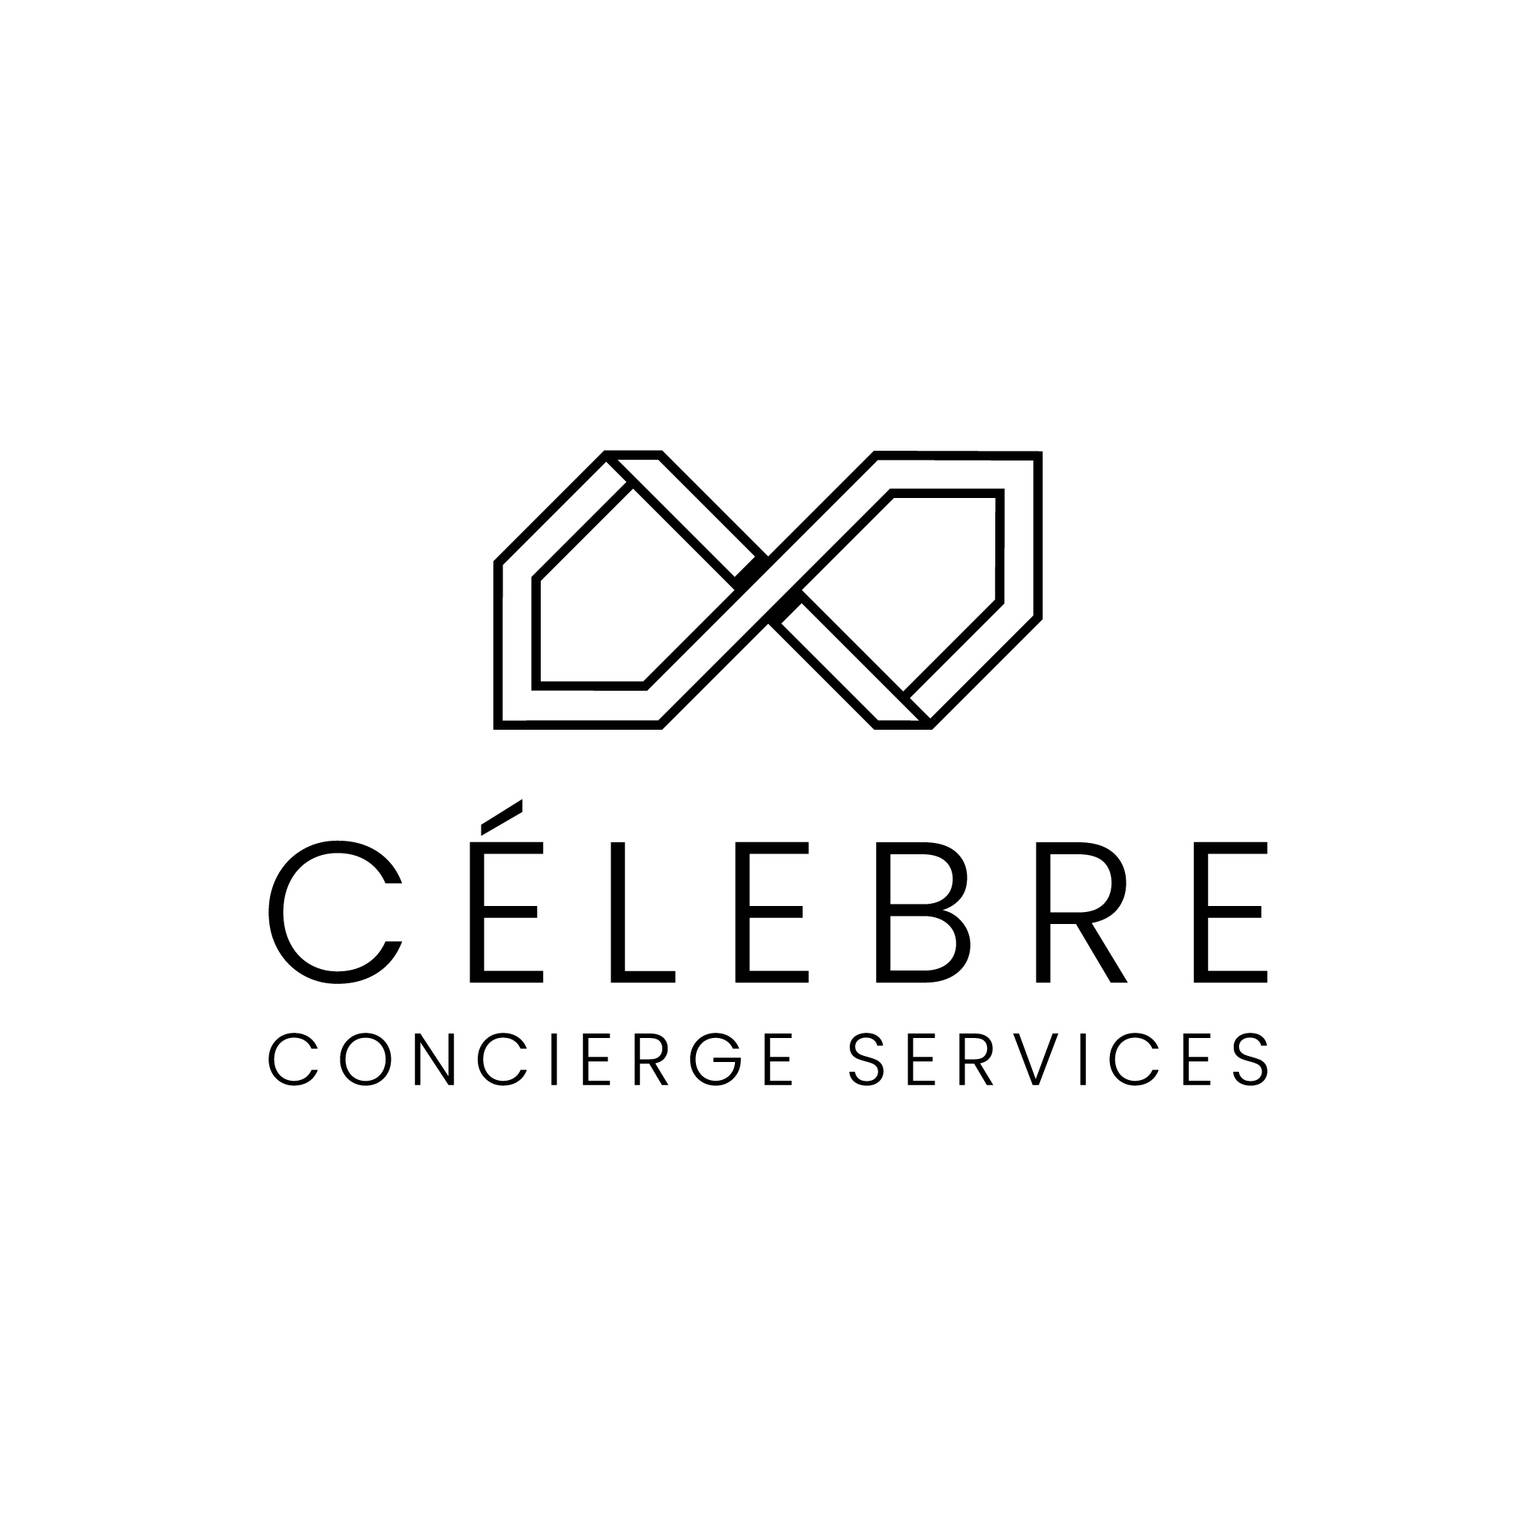 Celebre Concierge Services